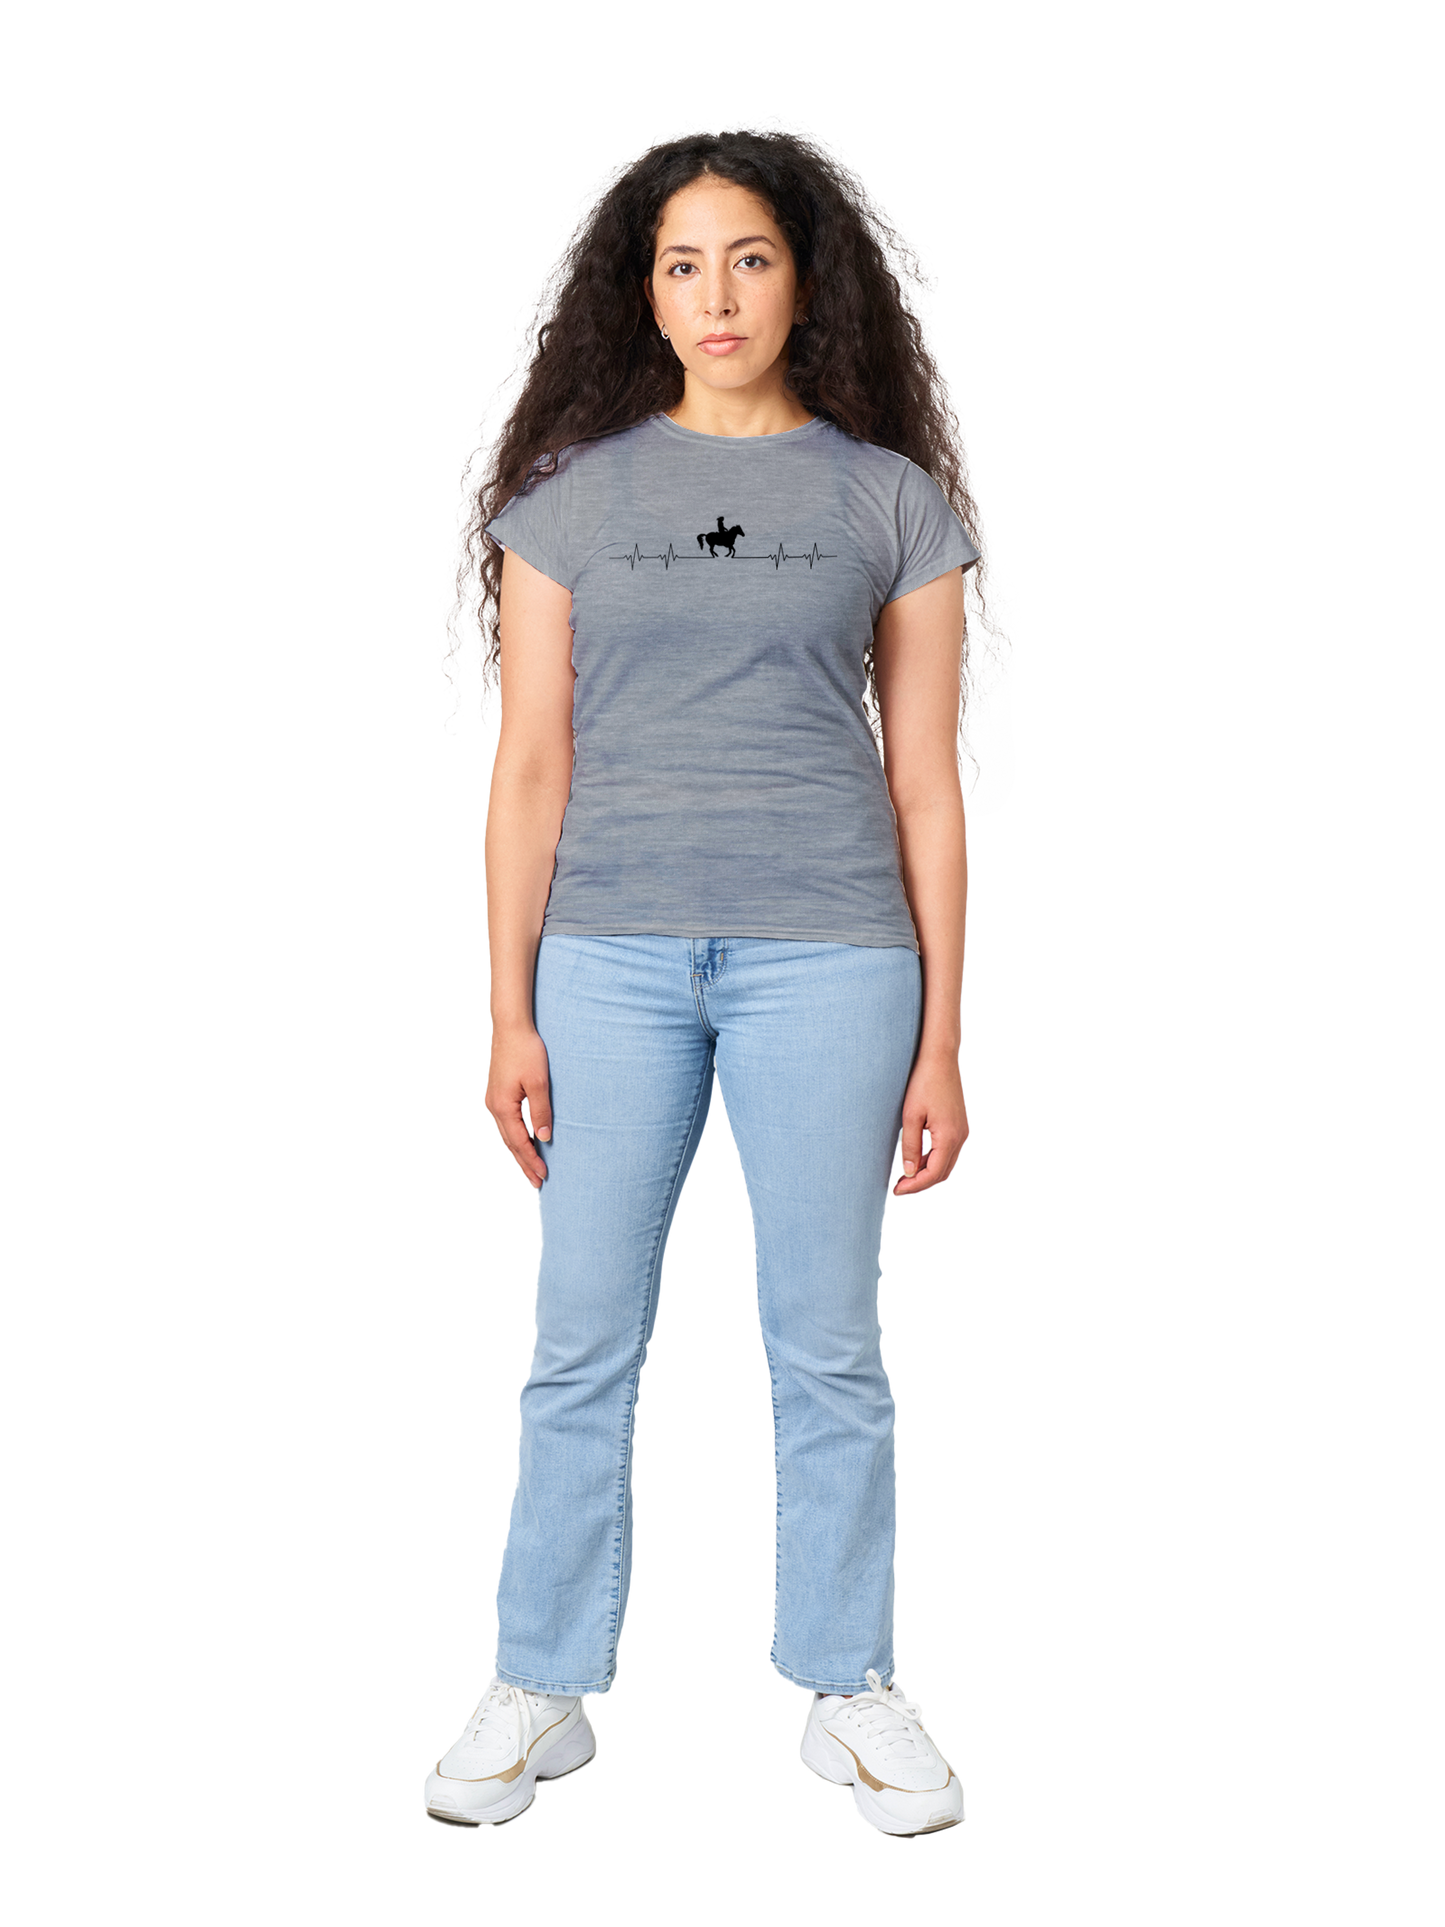 Hand Drawn Horse || Women's Crewneck T-shirt - Design: "HEARTBEAT"; Static Design; Personalizable Back Text